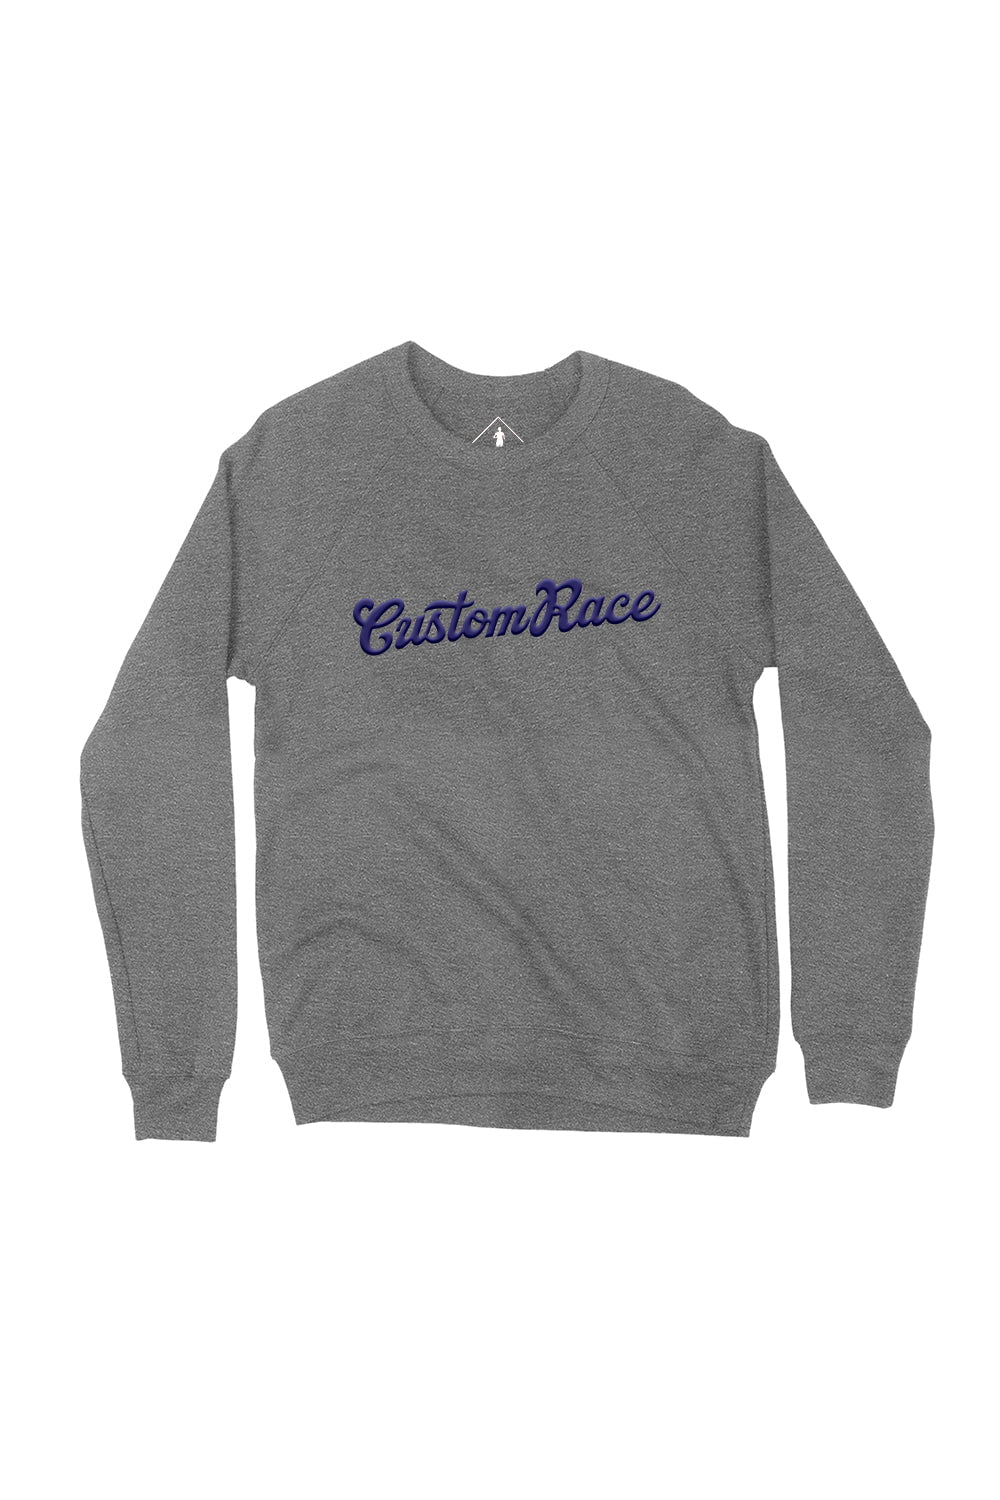 Sarah Marie Design Studio Sweatshirt XSmall / Grey Triblend / Blue Custom Race/City Sweatshirt